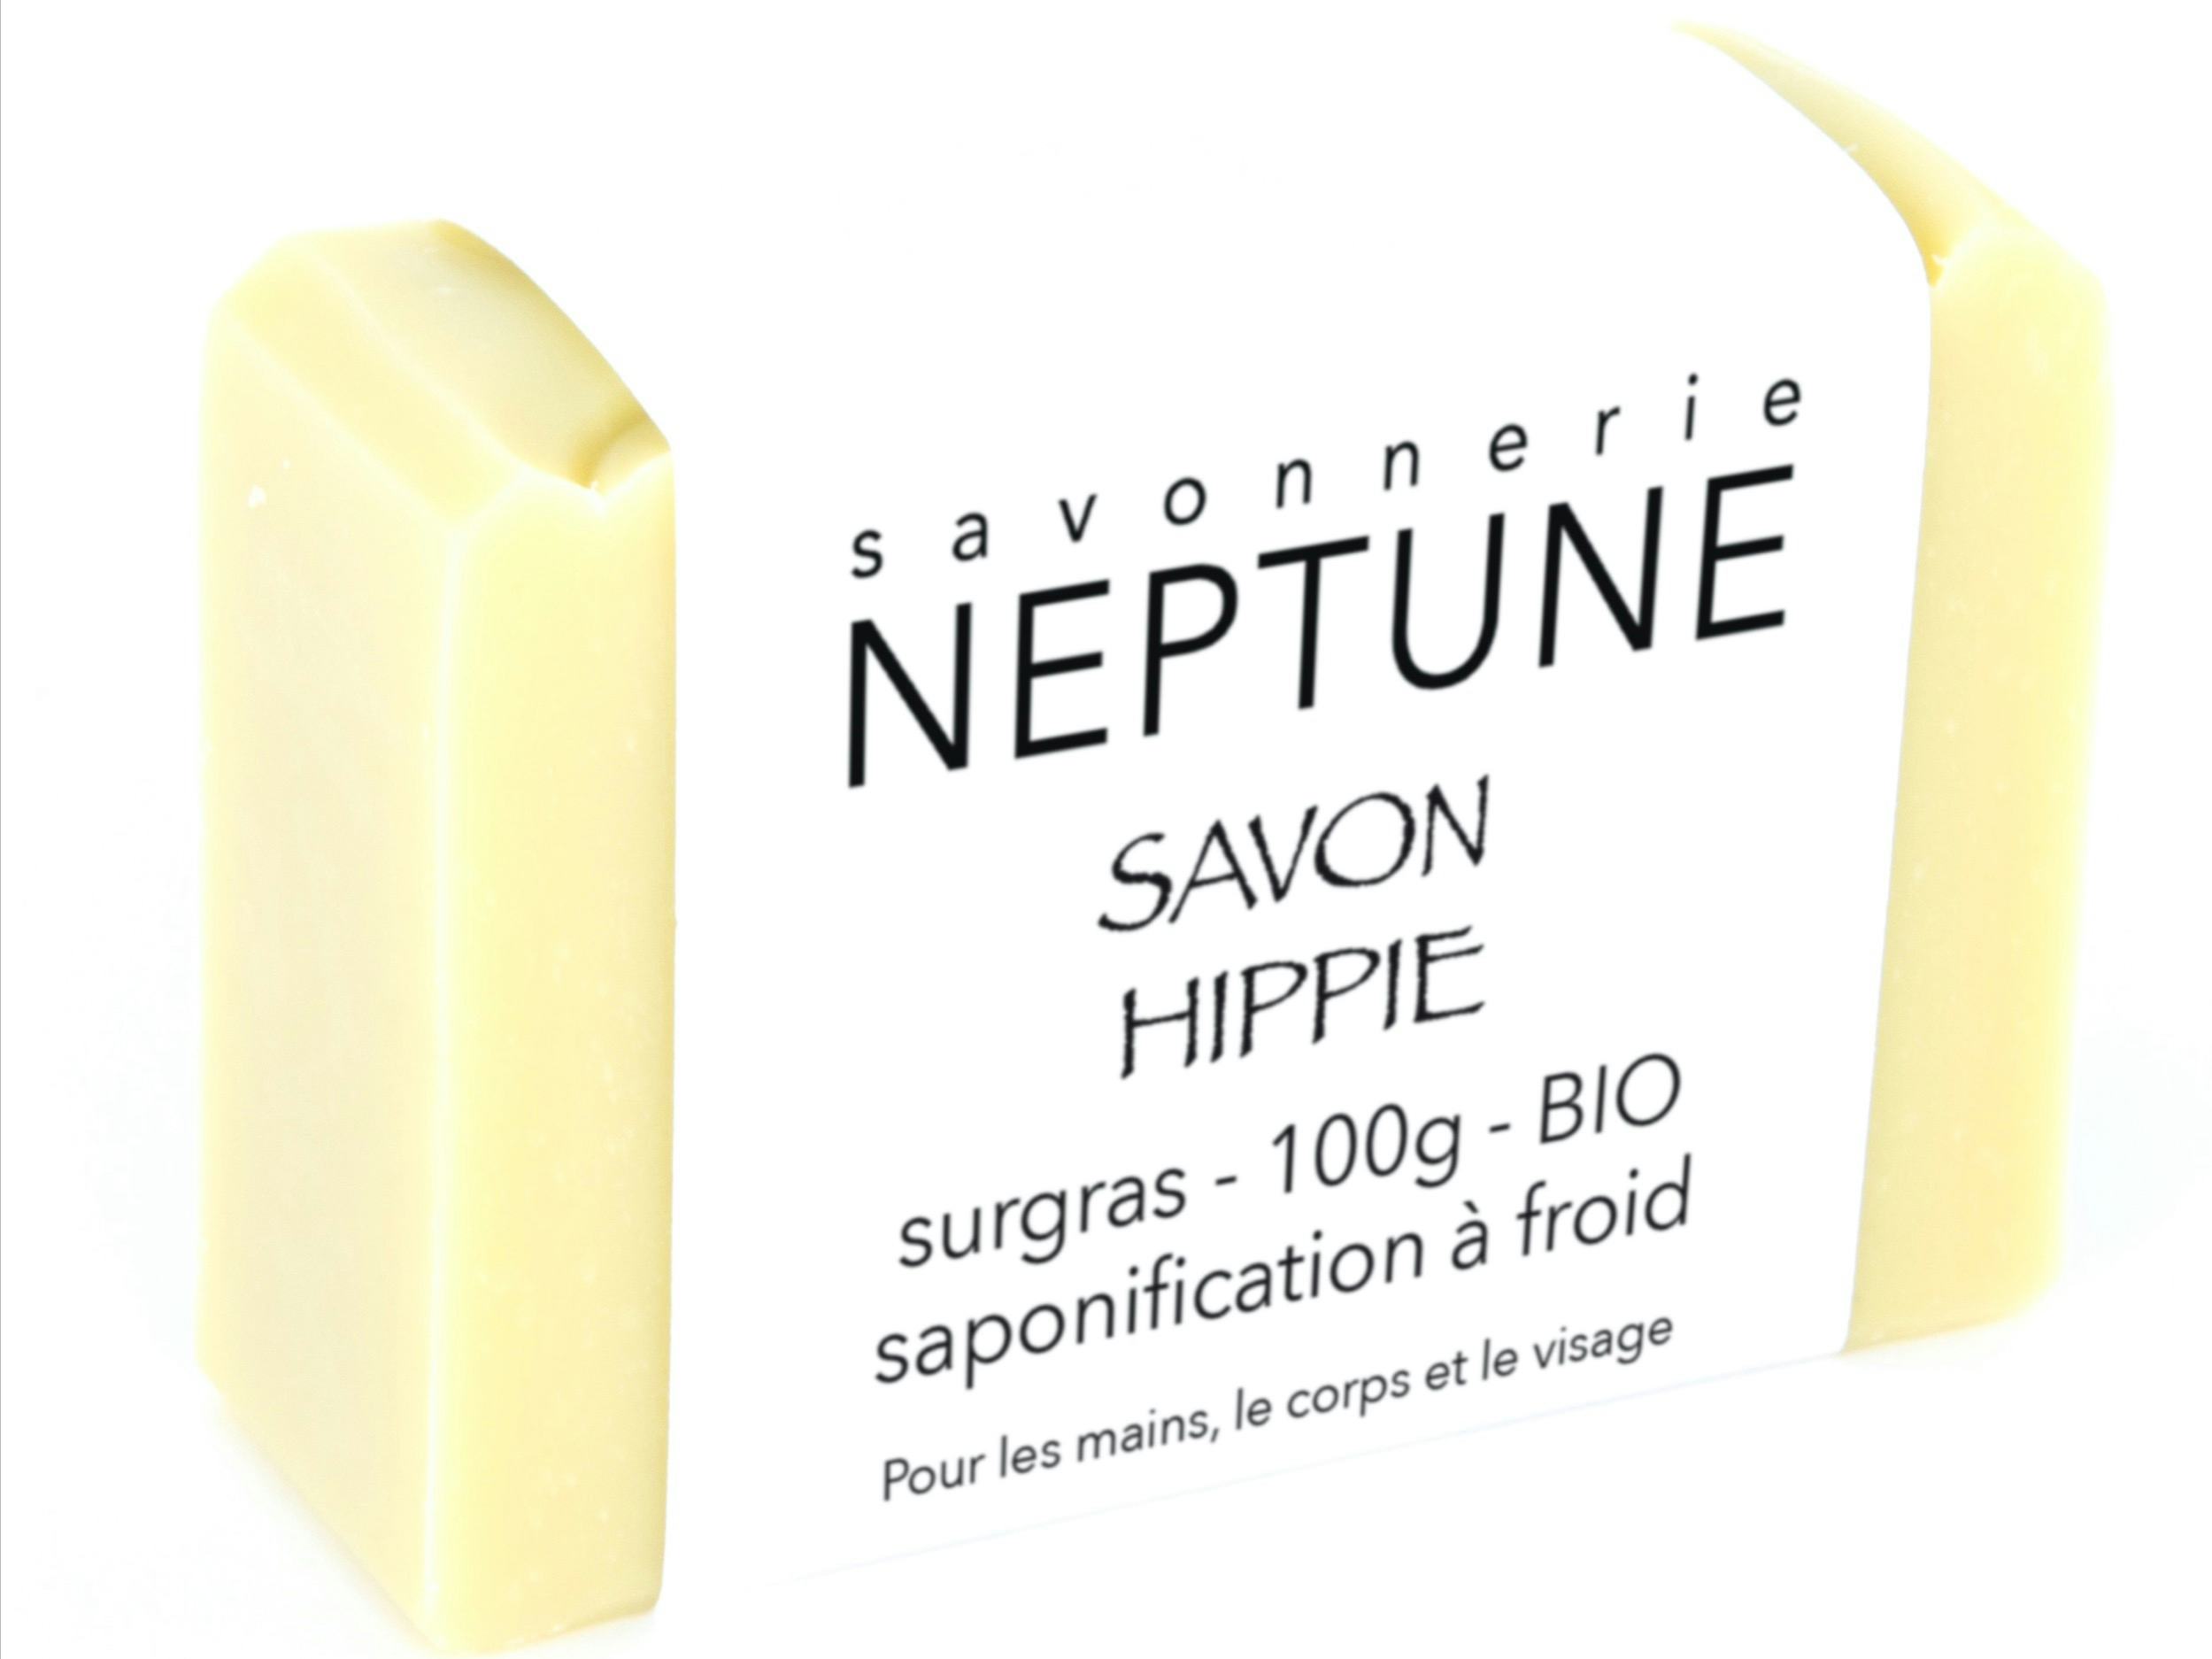 Savon hippie - bio, produit artisanal en vente directe en Suisse